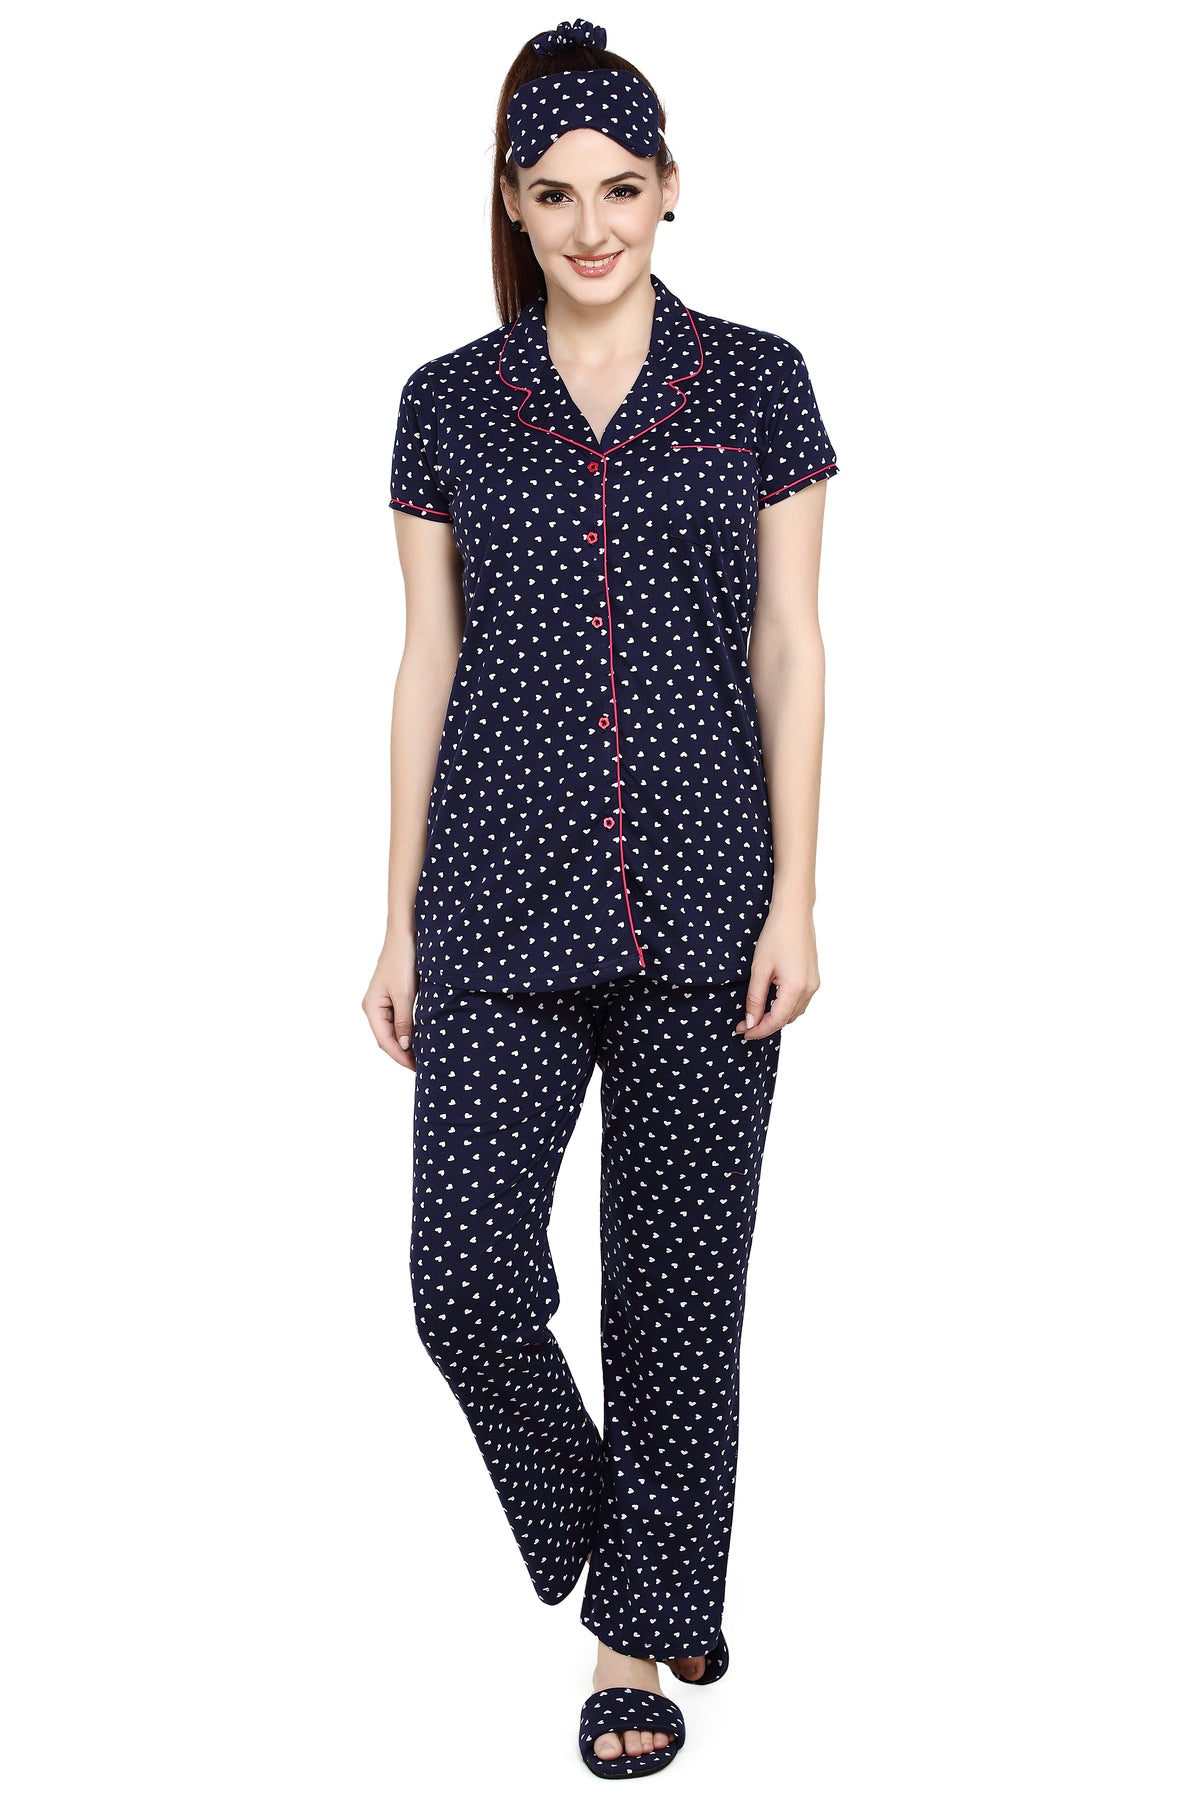 evolove Women's Hosiery Cotton Twilight Blue Hearts Print Button & Collar Shirt-Pyjama Set / Night Suit